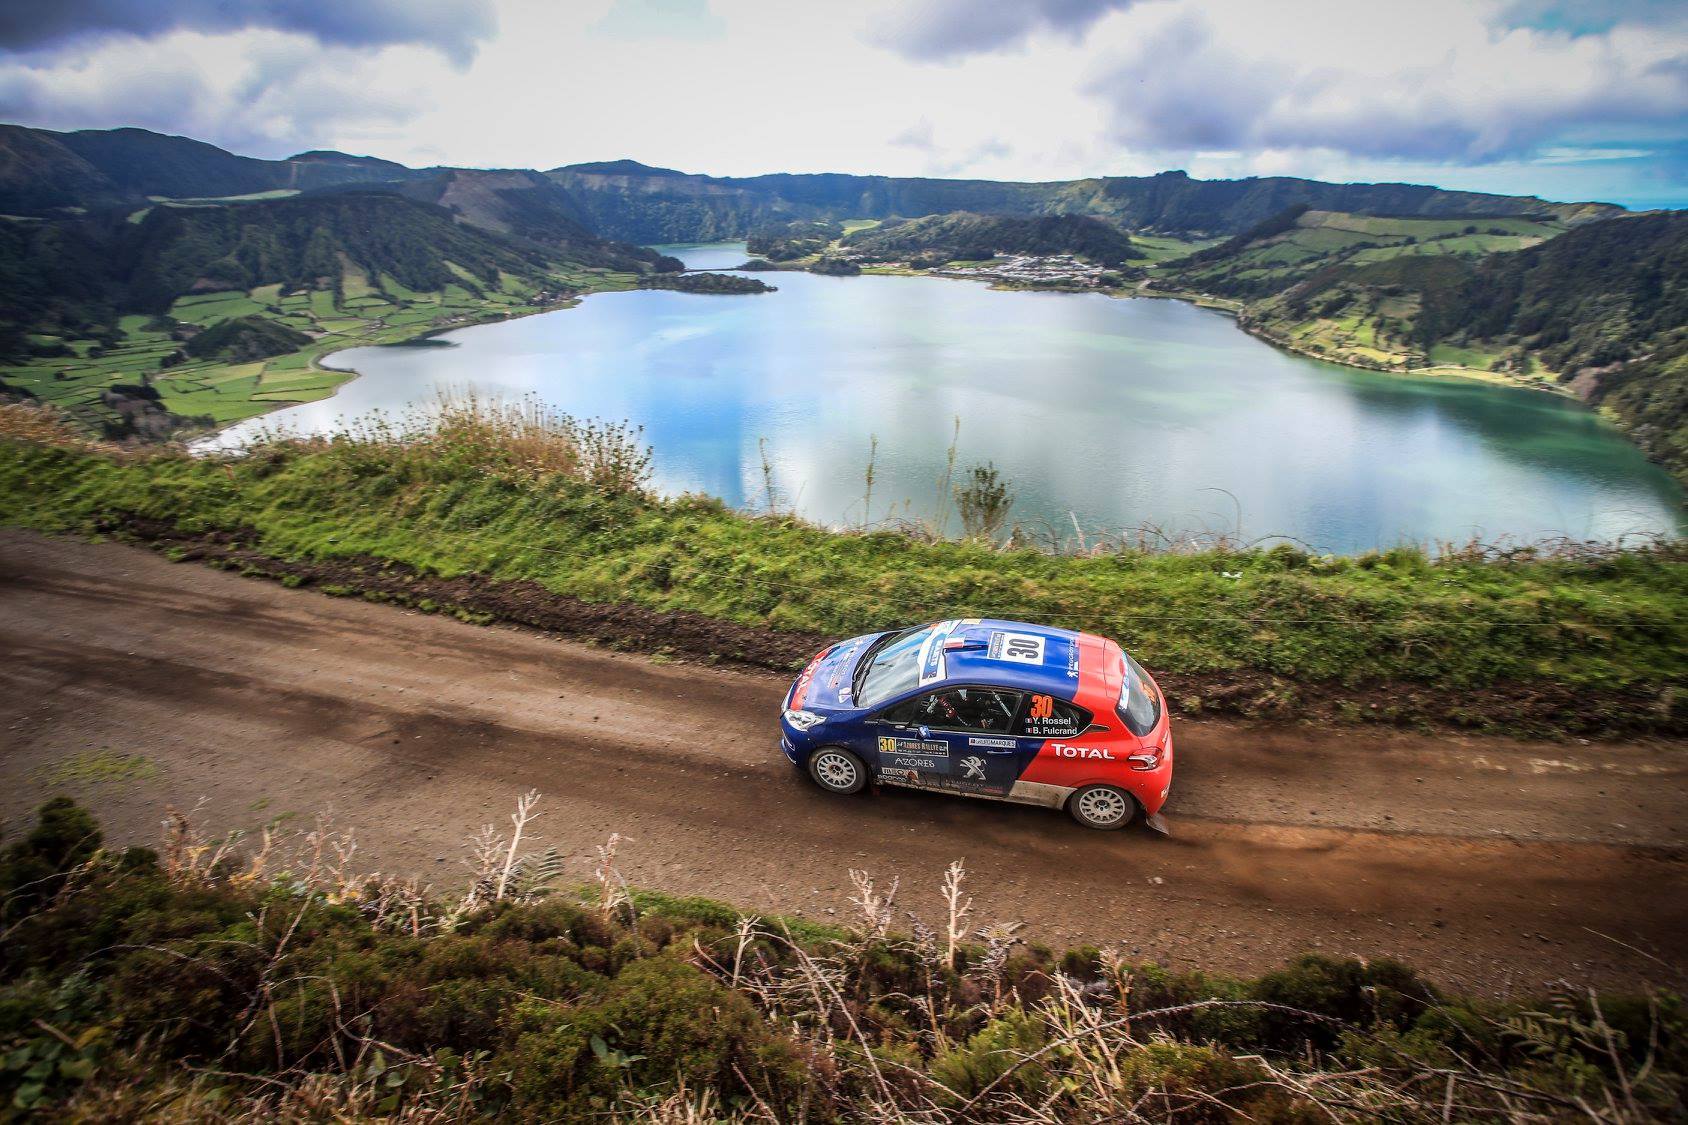 Azores Rallye 2019 - Best Photos - FIA ERC - 08